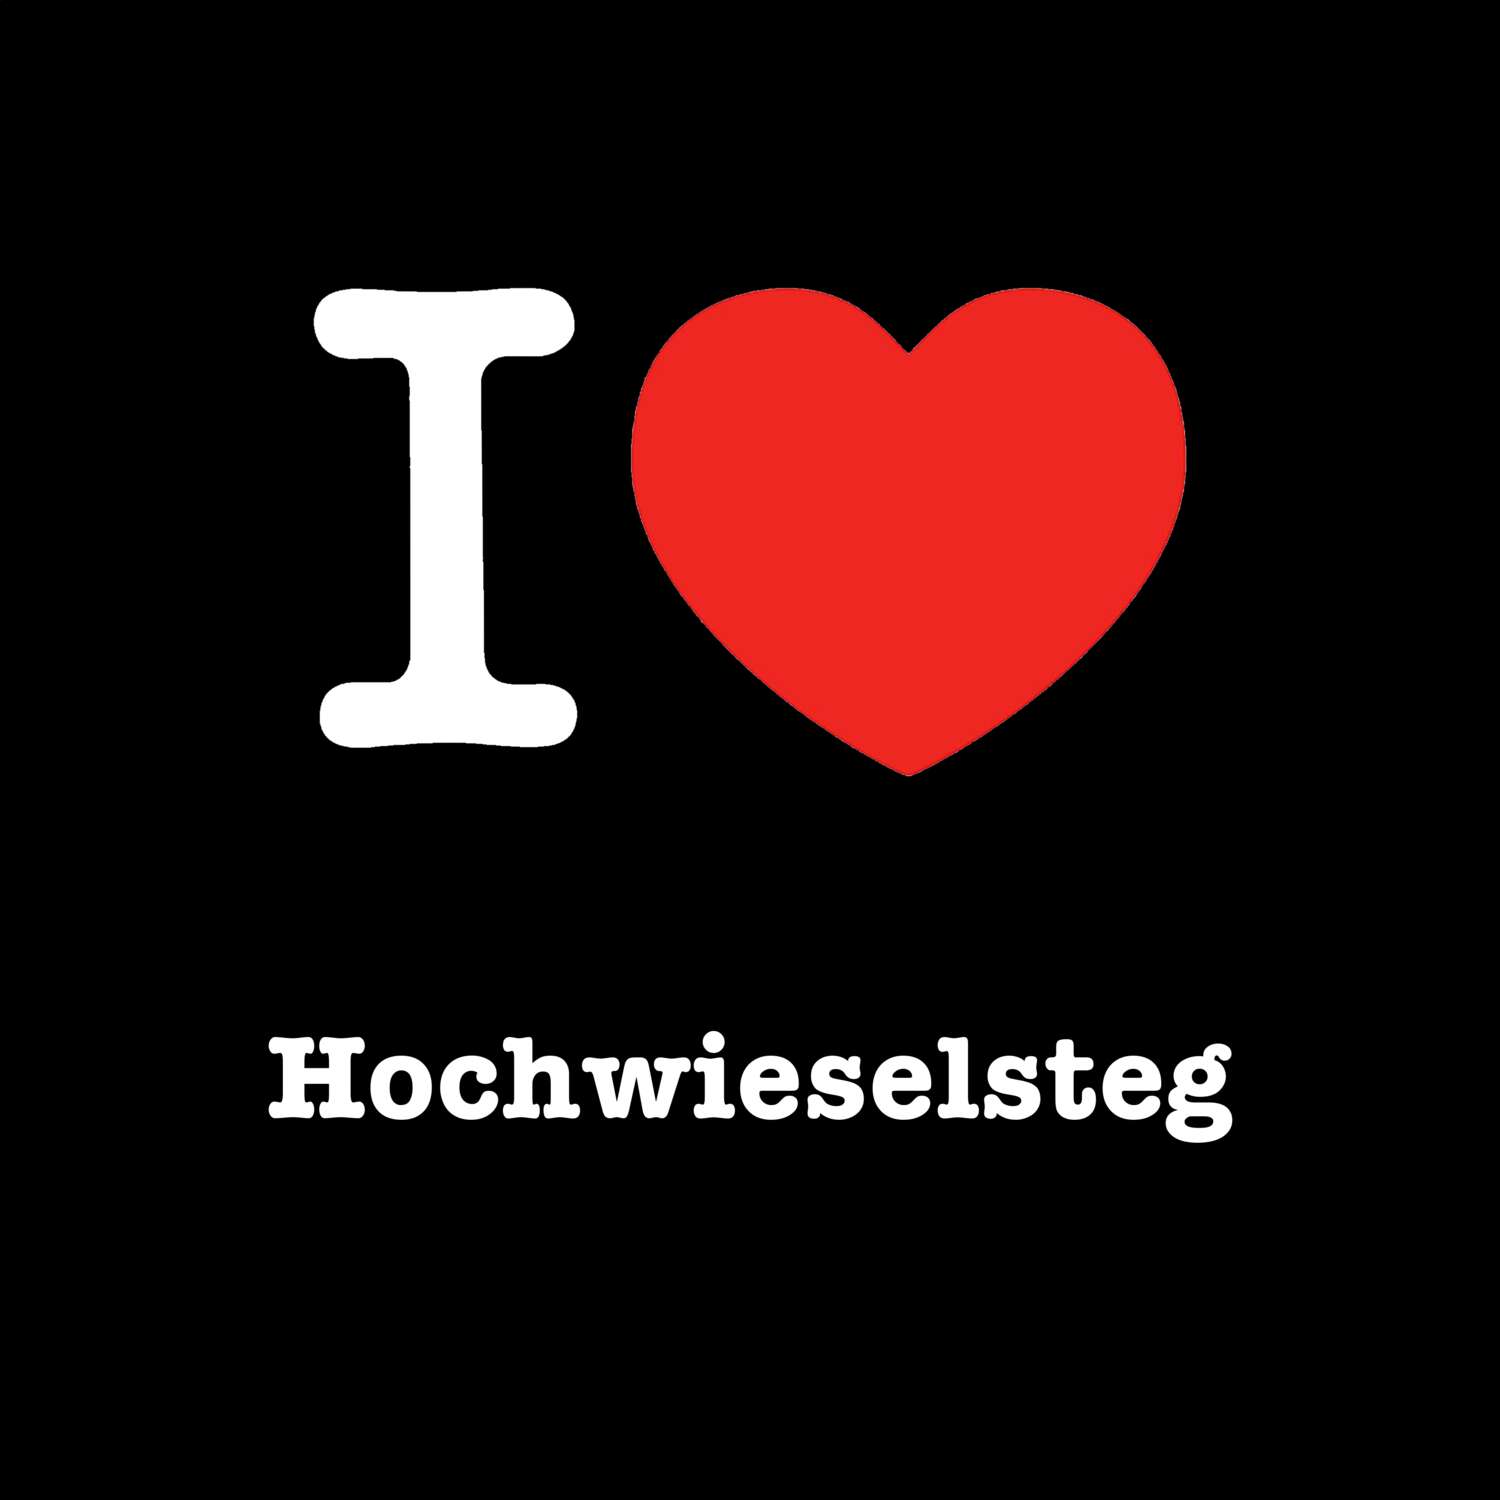 Hochwieselsteg T-Shirt »I love«